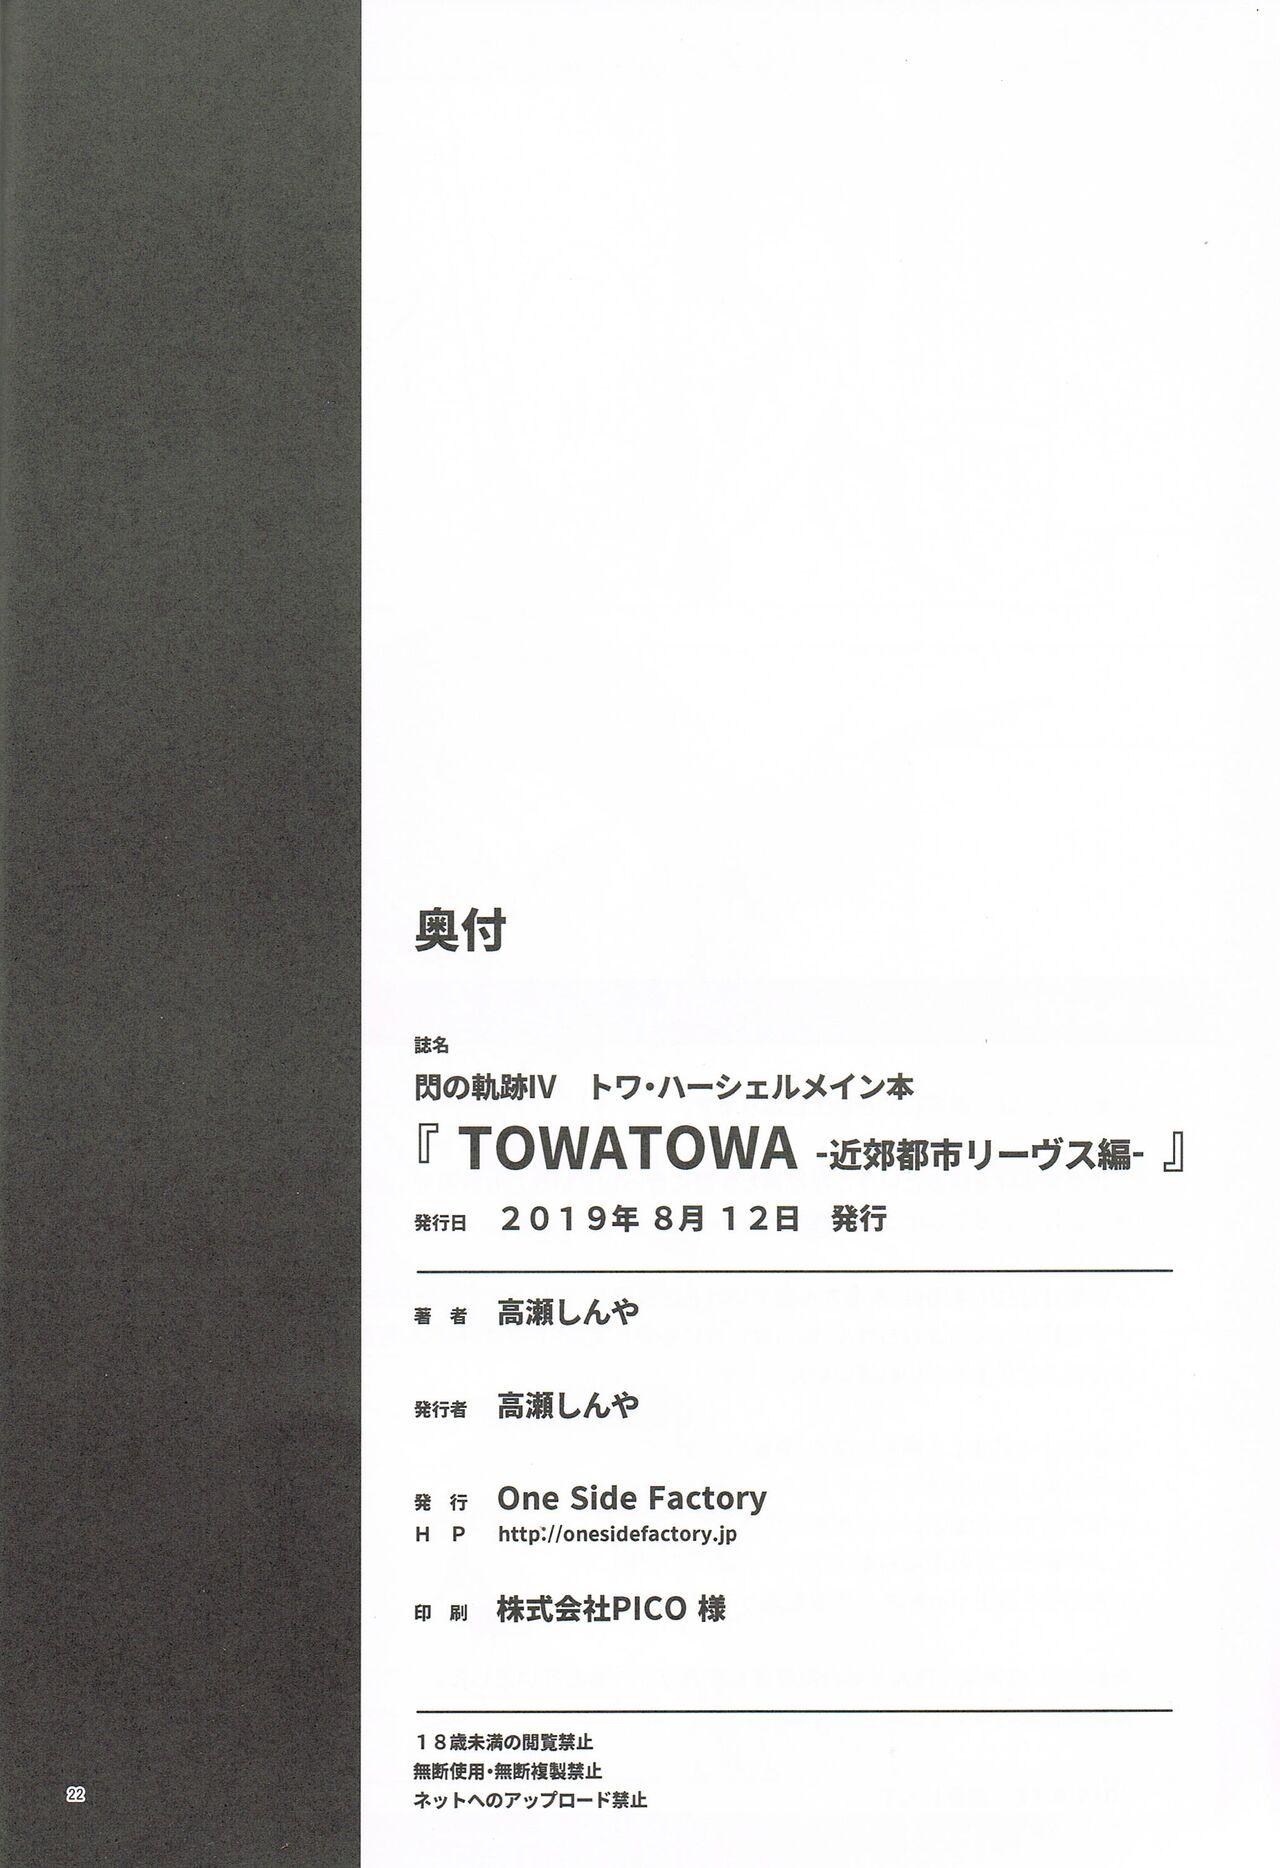 TOWATOWA 20